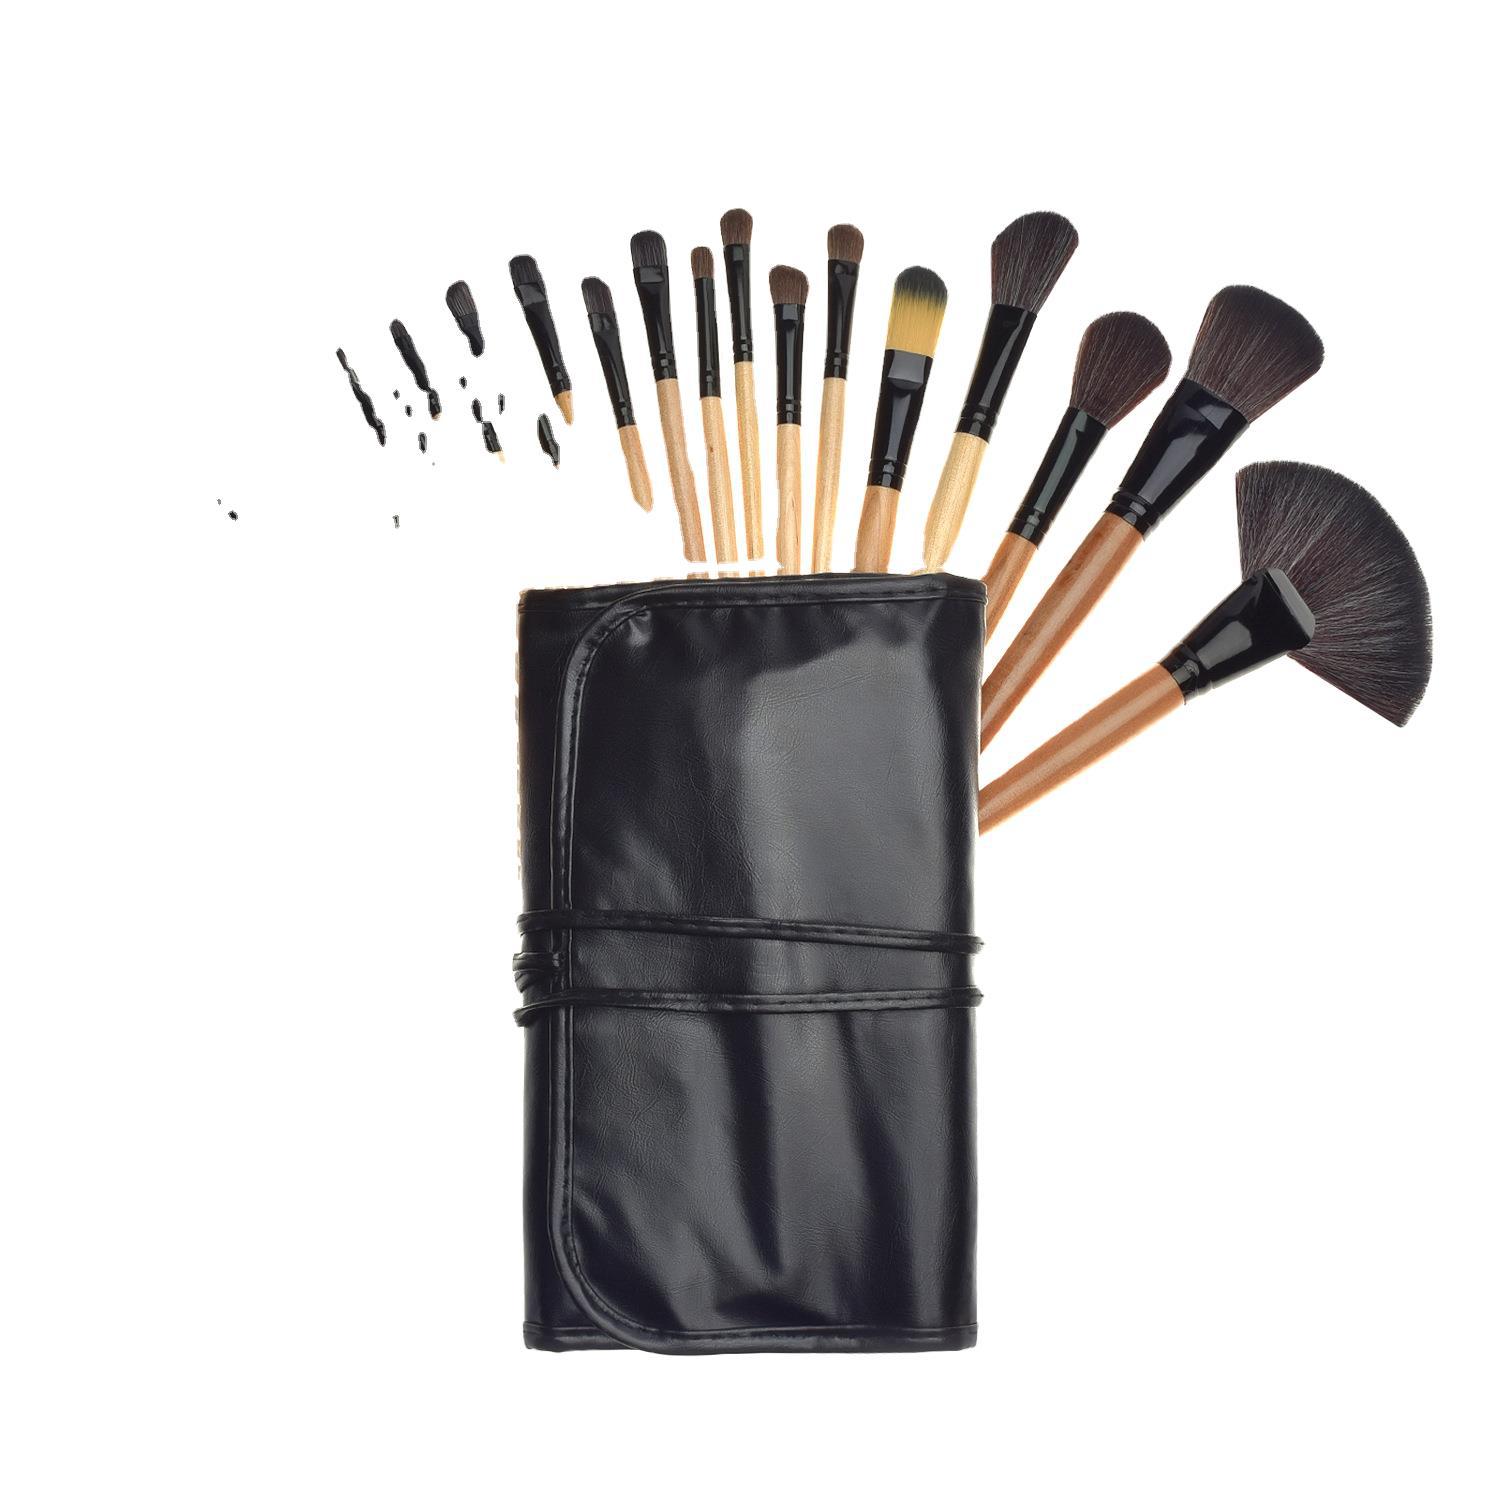 24 makeup brushes in stock wood color makeup brush set